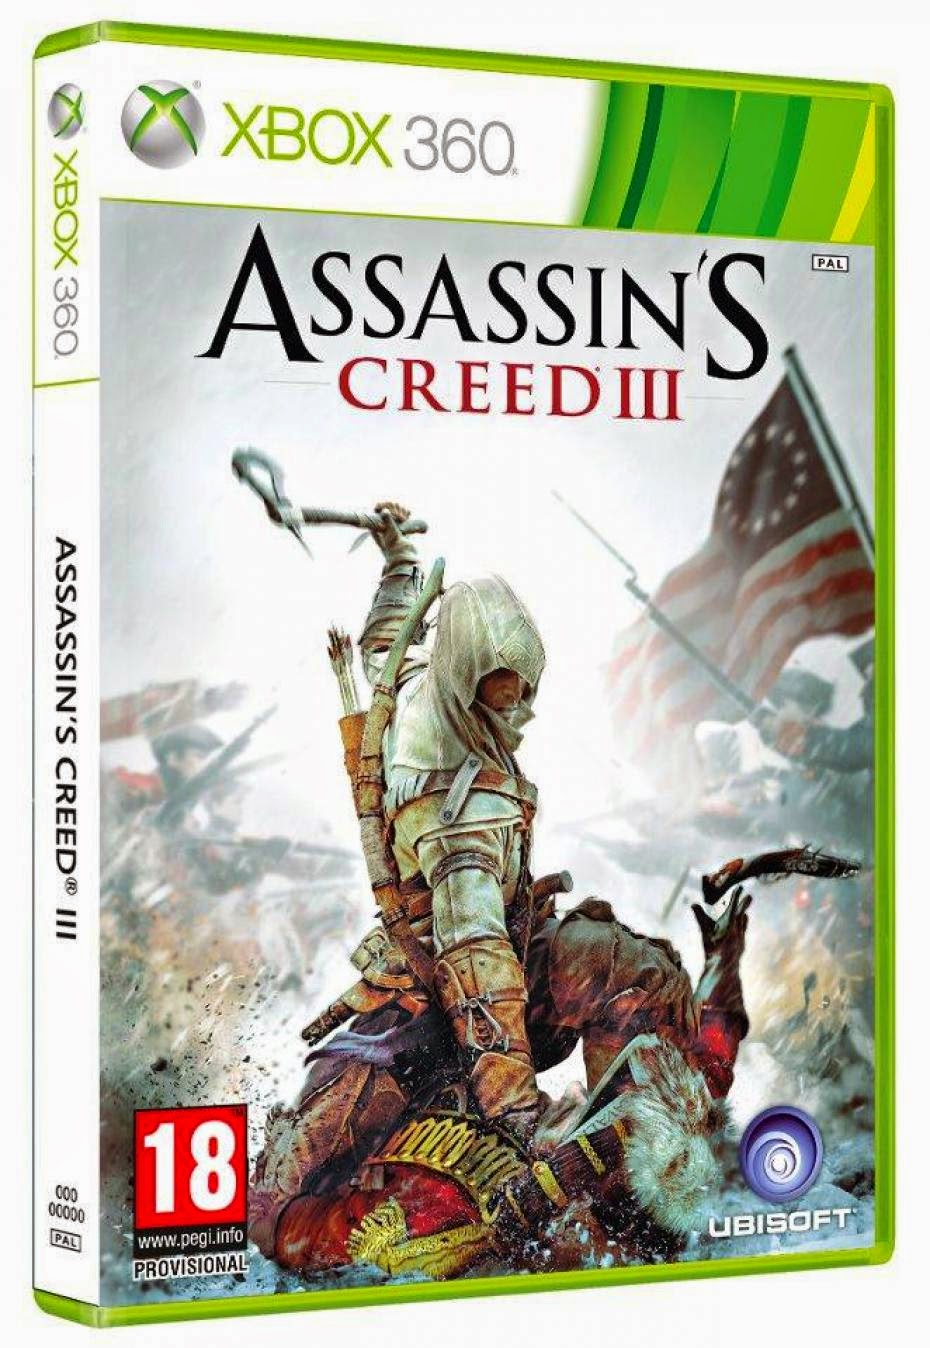 Xbox 360 игры на компьютер. Assassin's Creed Xbox 360 диск. Ассасин Крид на Xbox 360. Assassins Creed 3 диск для Xbox 360. Диски для Xbox 360 ассасин.